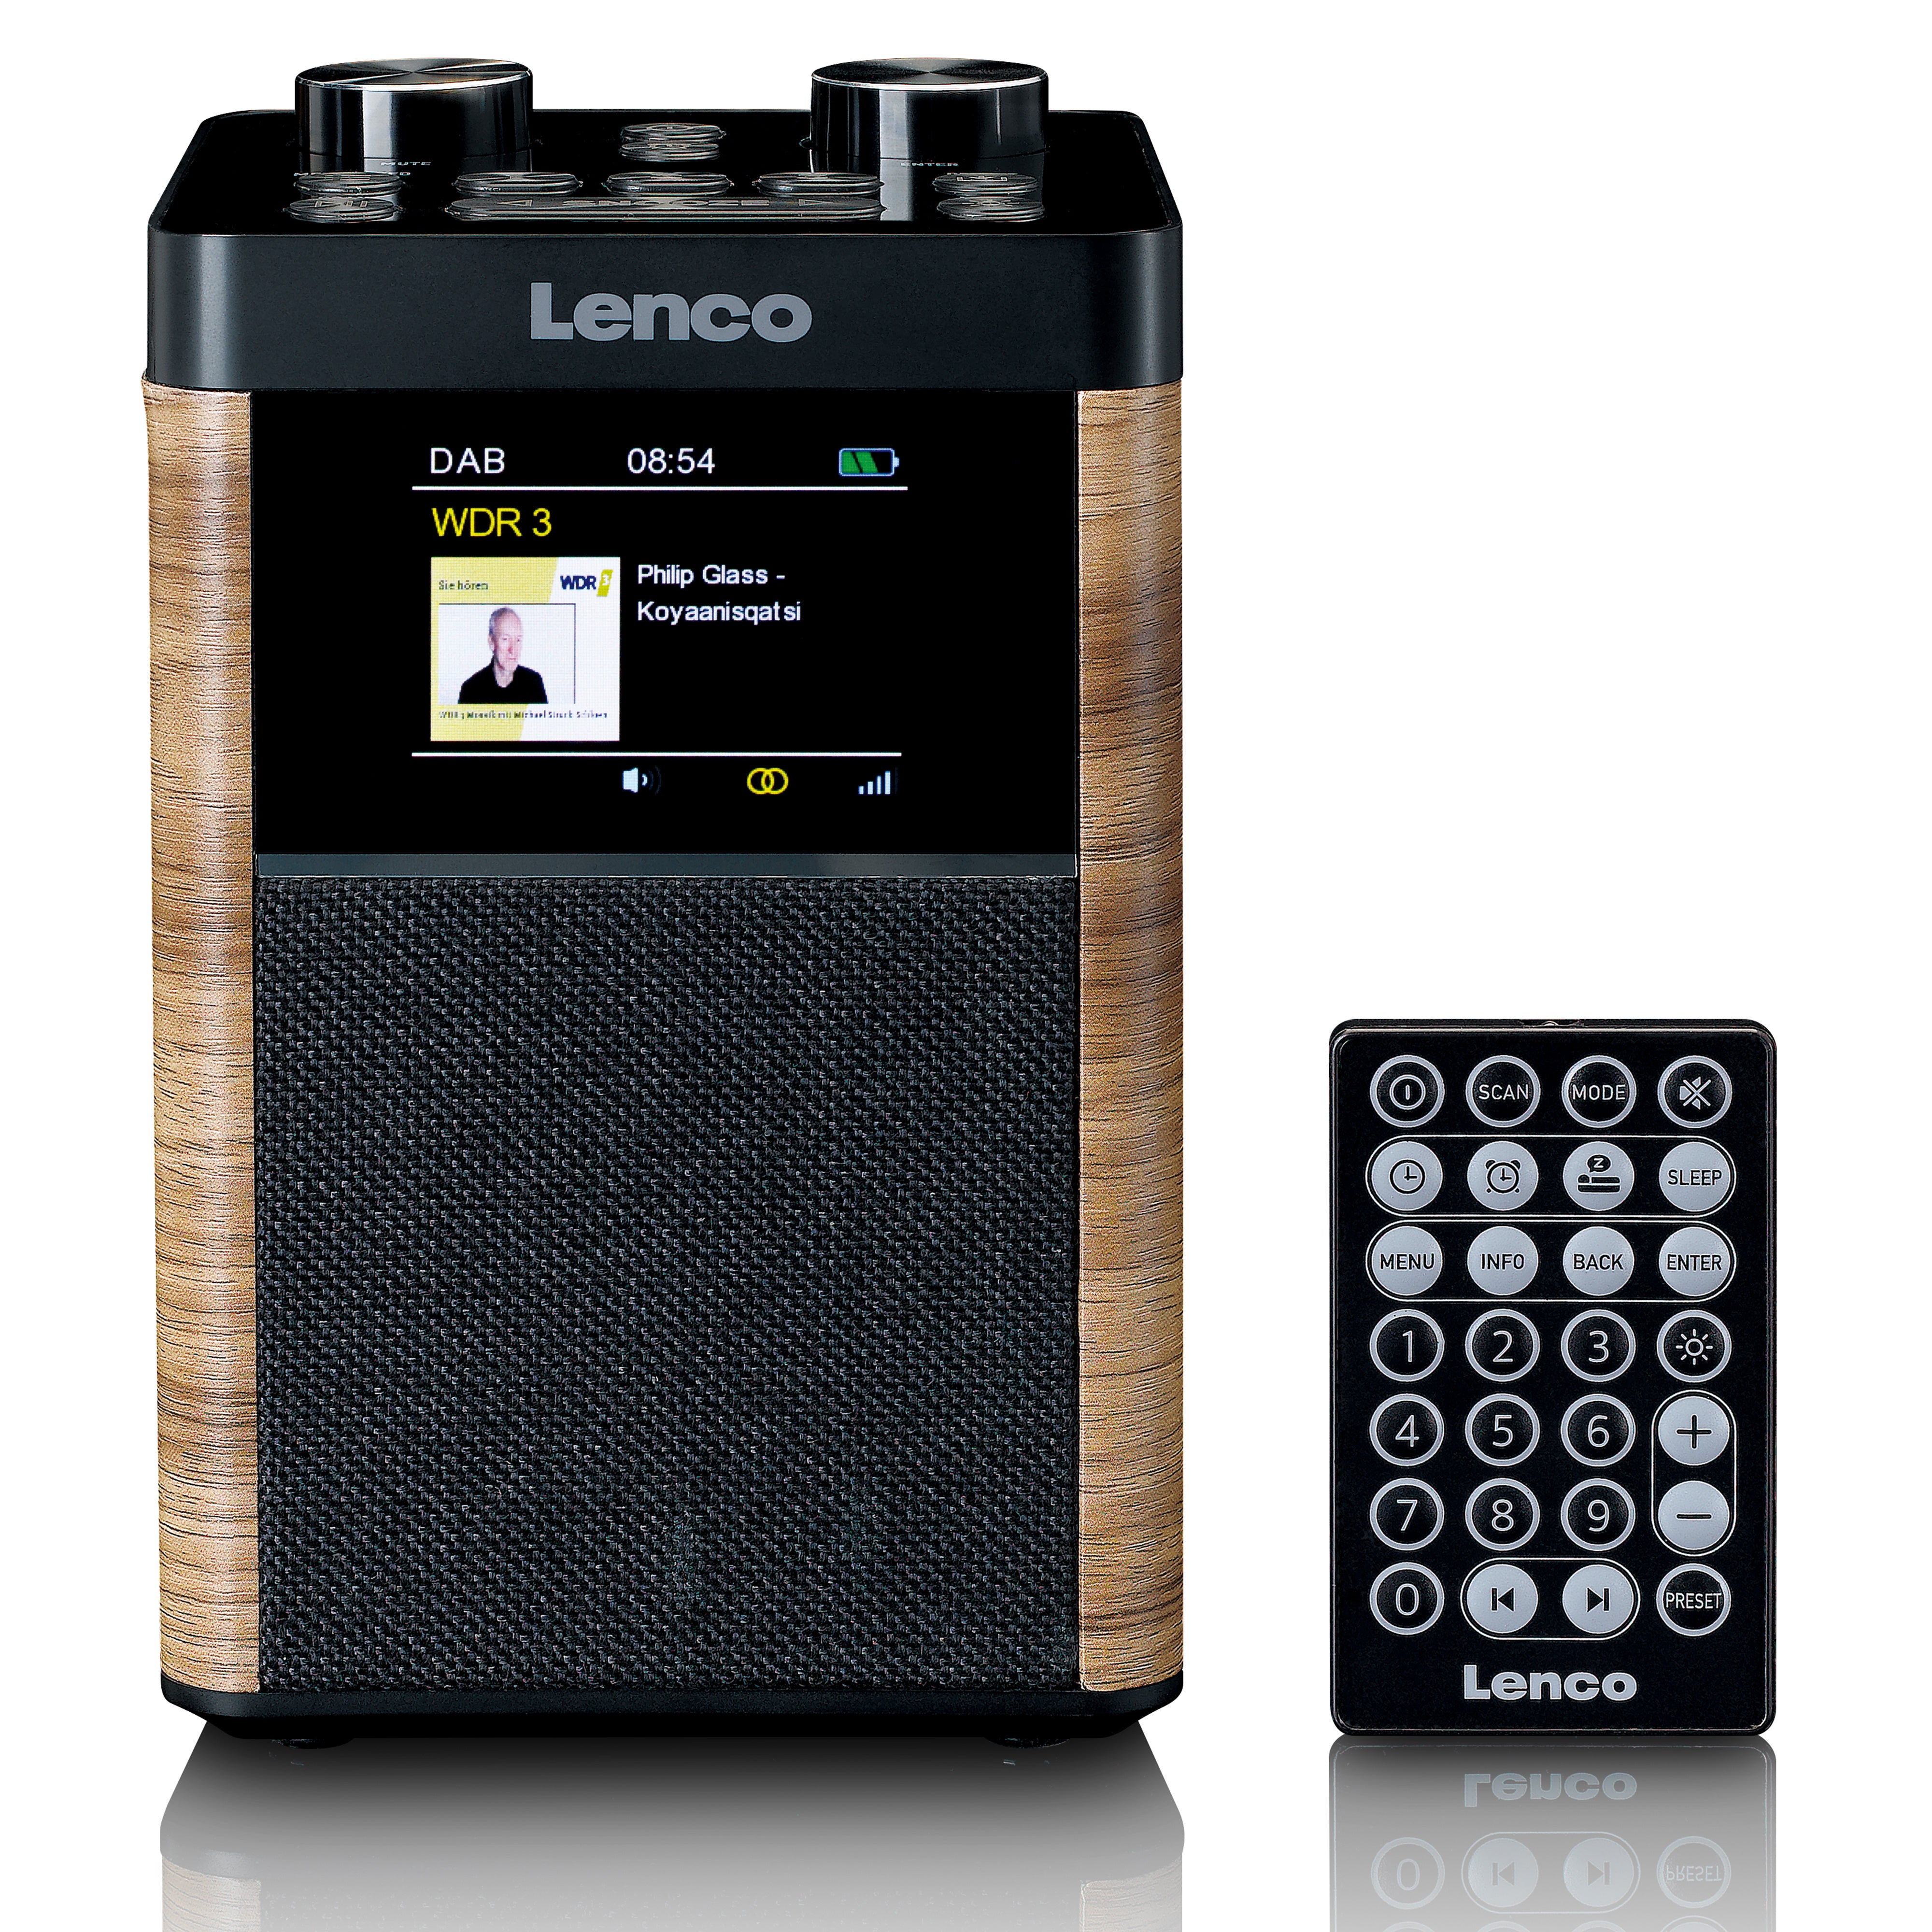 Offizieller Webshop | – Lenco.de Webshop kaufen? Lenco Jetzt offiziellen Lenco im PDR-060WD -